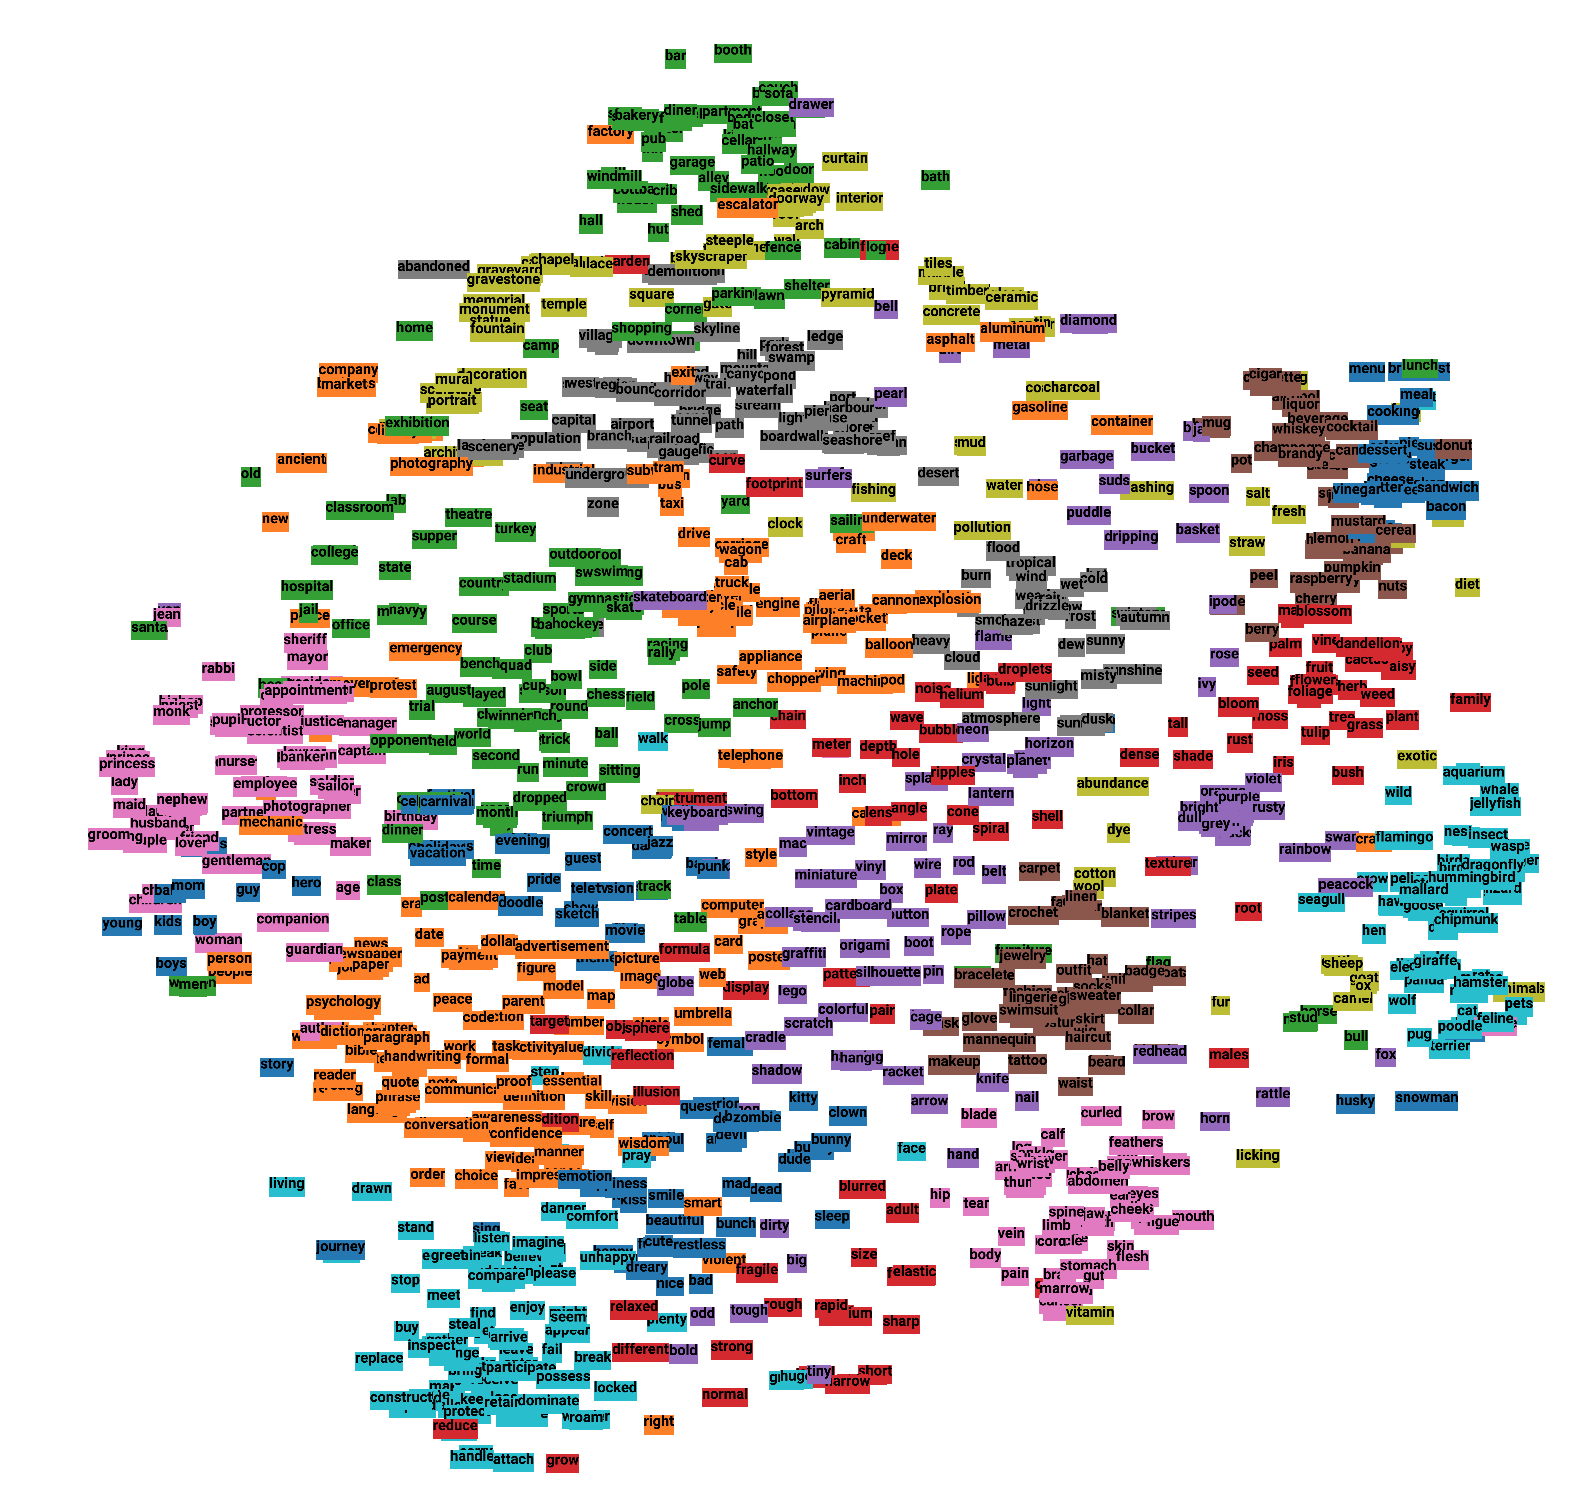 Wikipedia clusters